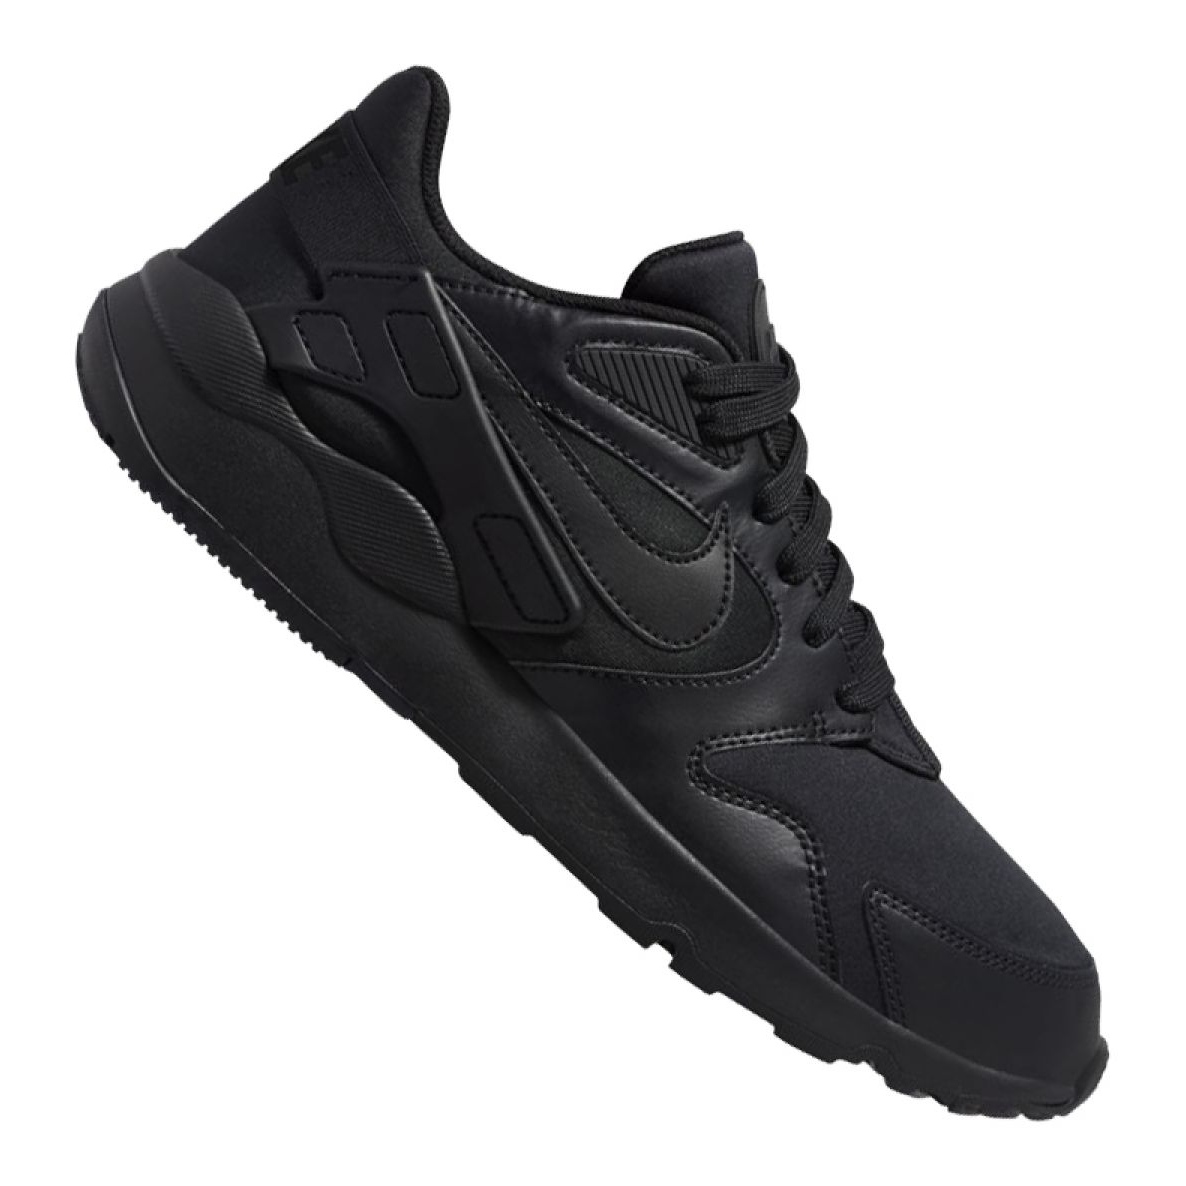 Nike Ld M shoe black - KeeShoes